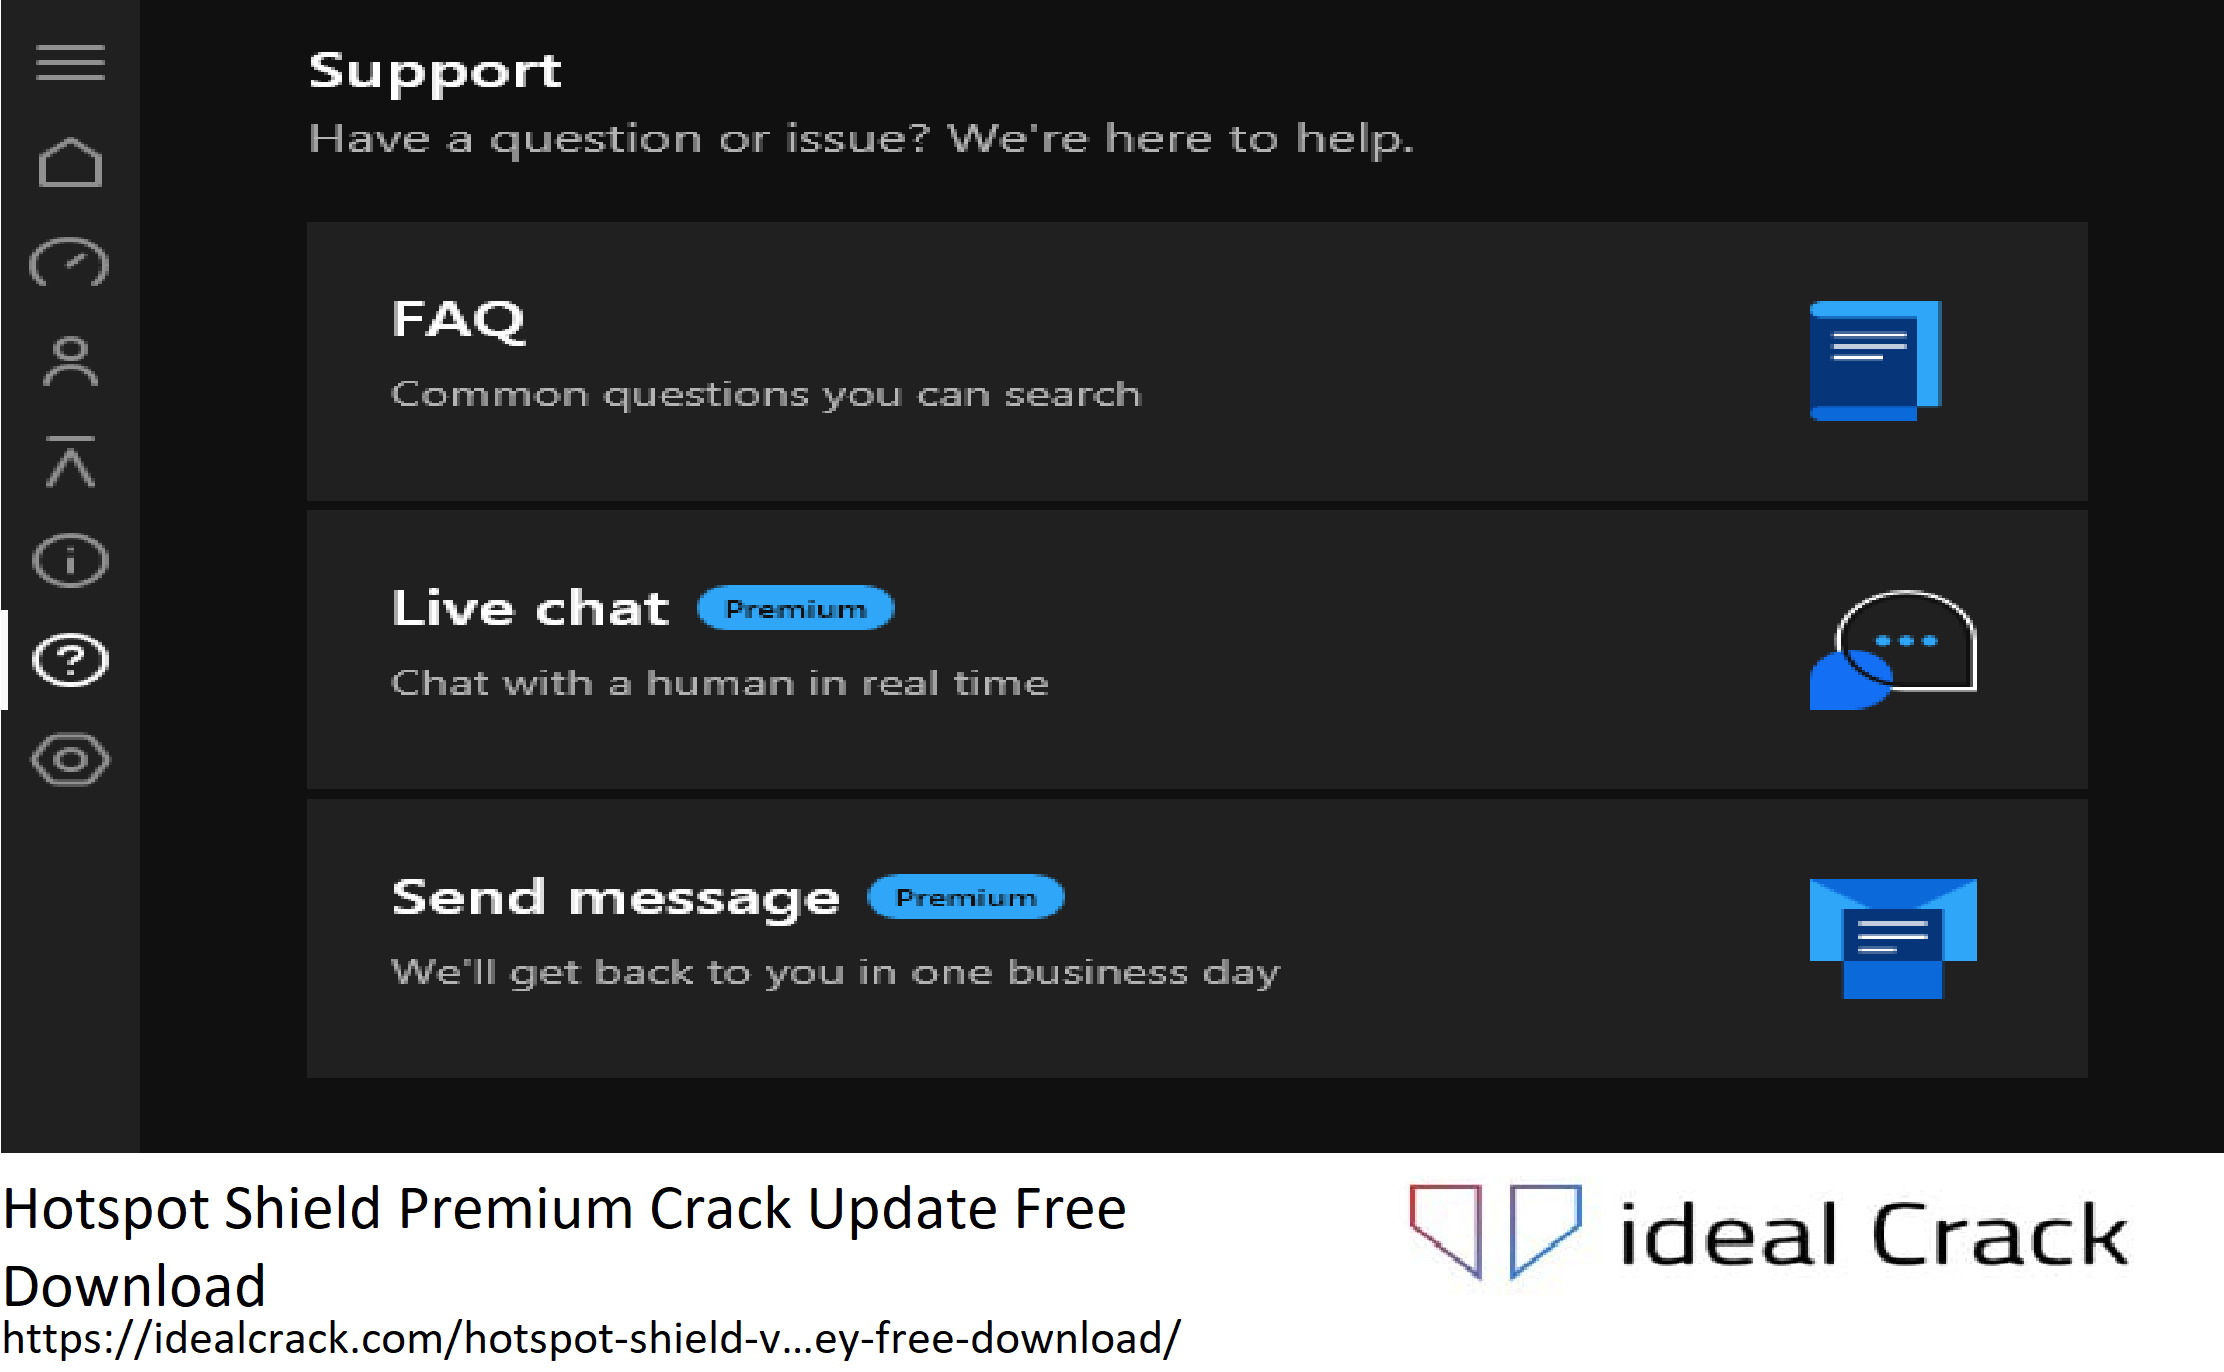 Hotspot Shield Premium Crack Update